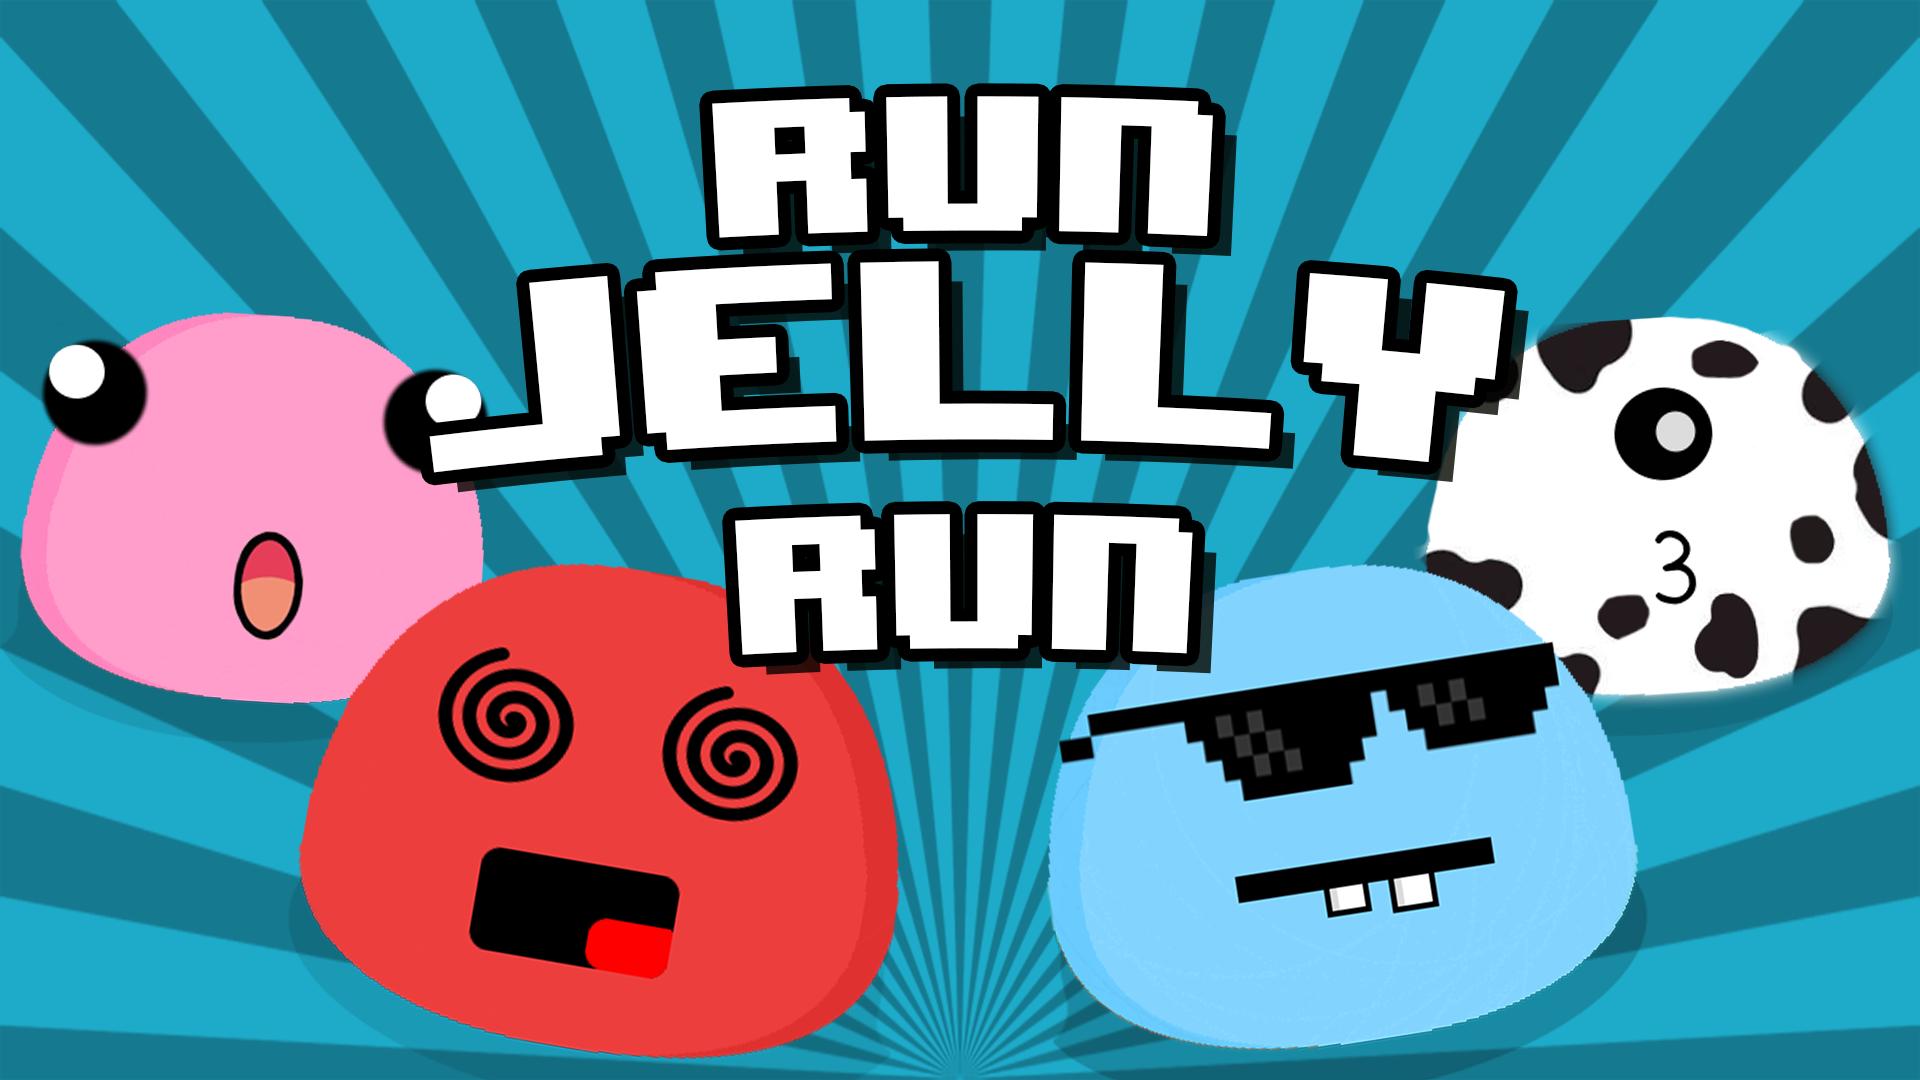 Желе ран. Jelly Run лого. Игра на двоих Jelly Run. Игра Джелли РАН b1. Jelly Run баннер.